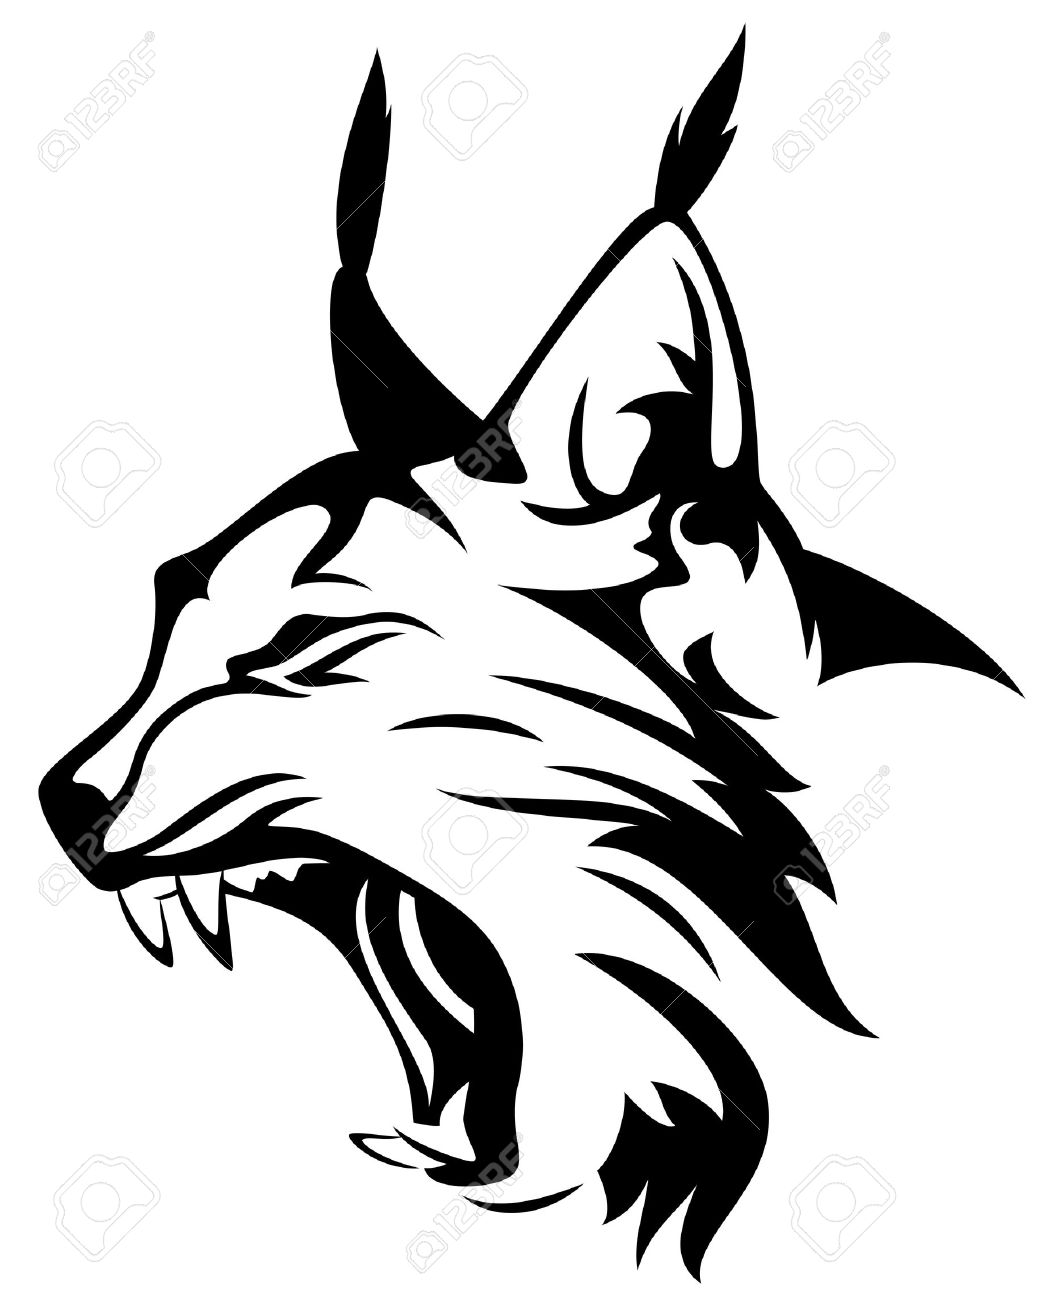 30905180-wild-lynx-head-mascot-black-and-white-animal-design.jpg